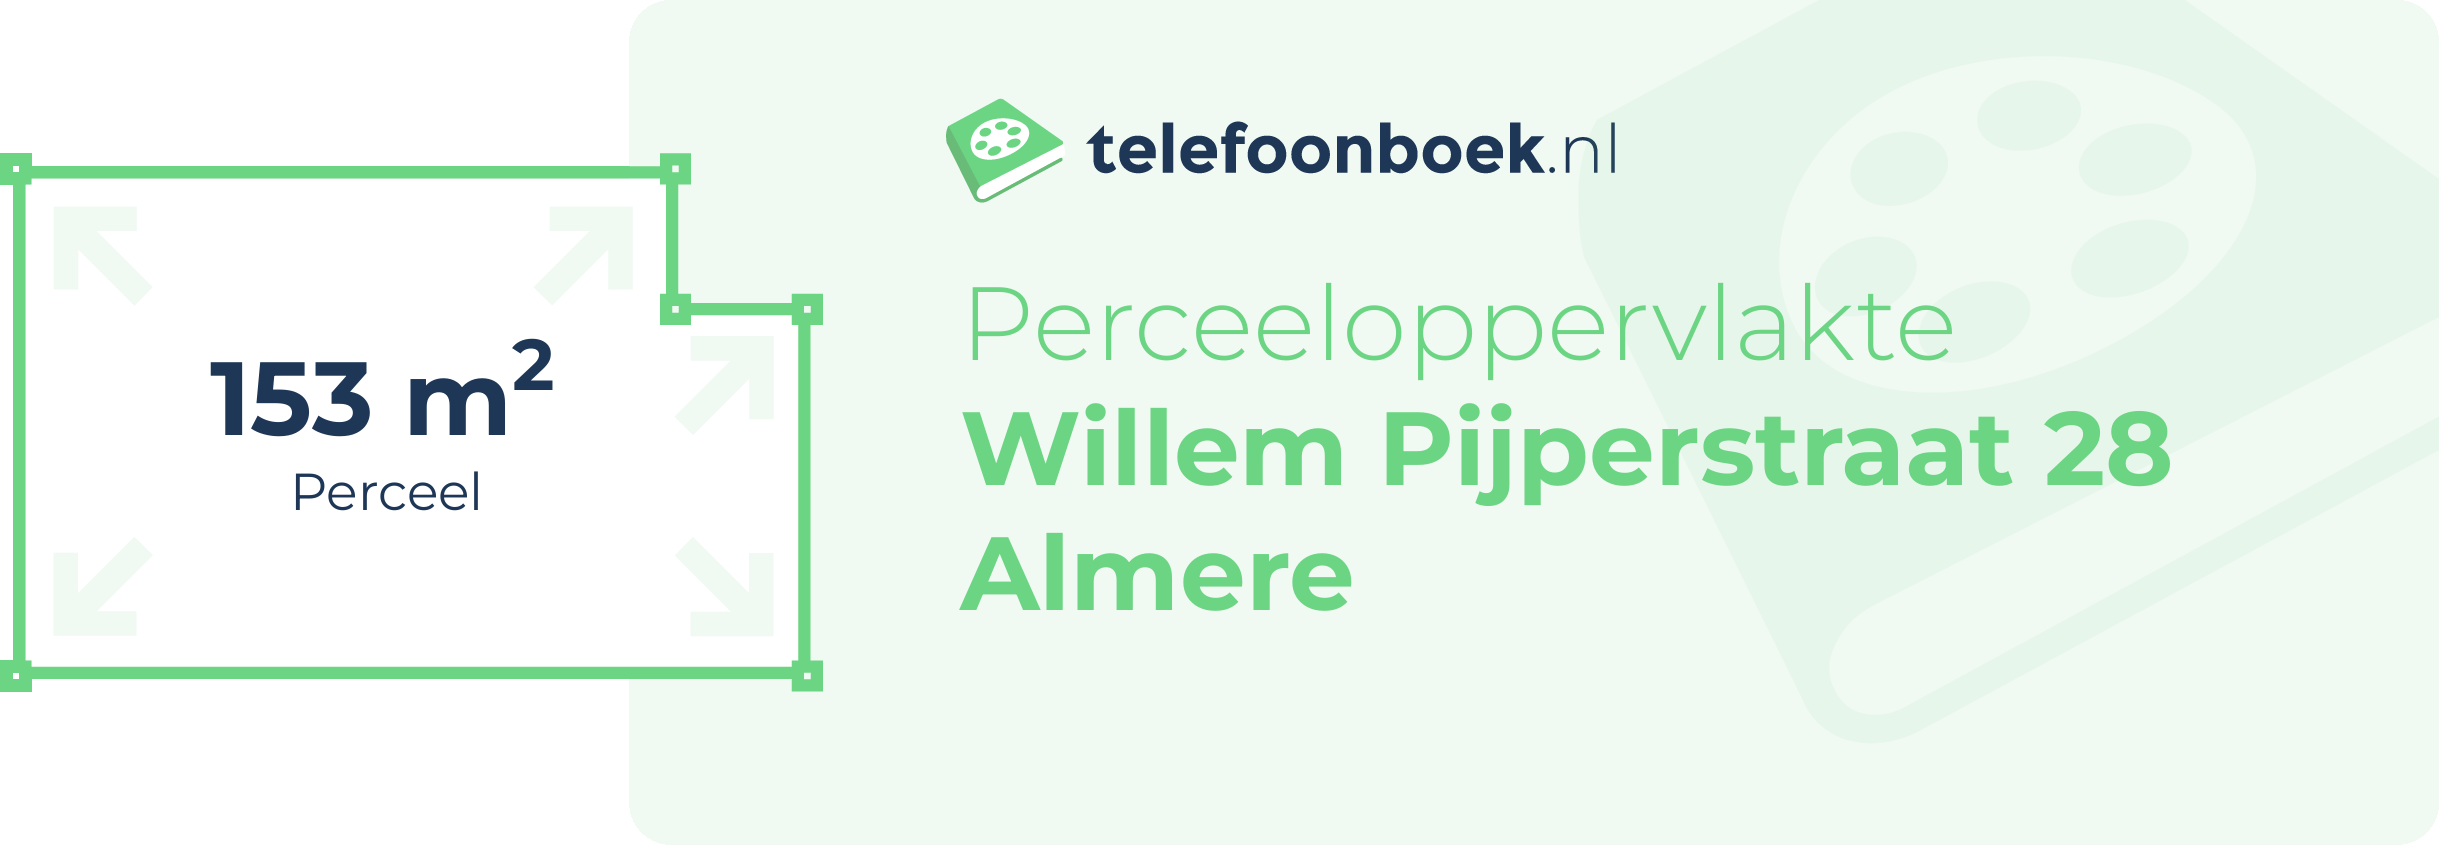 Perceeloppervlakte Willem Pijperstraat 28 Almere